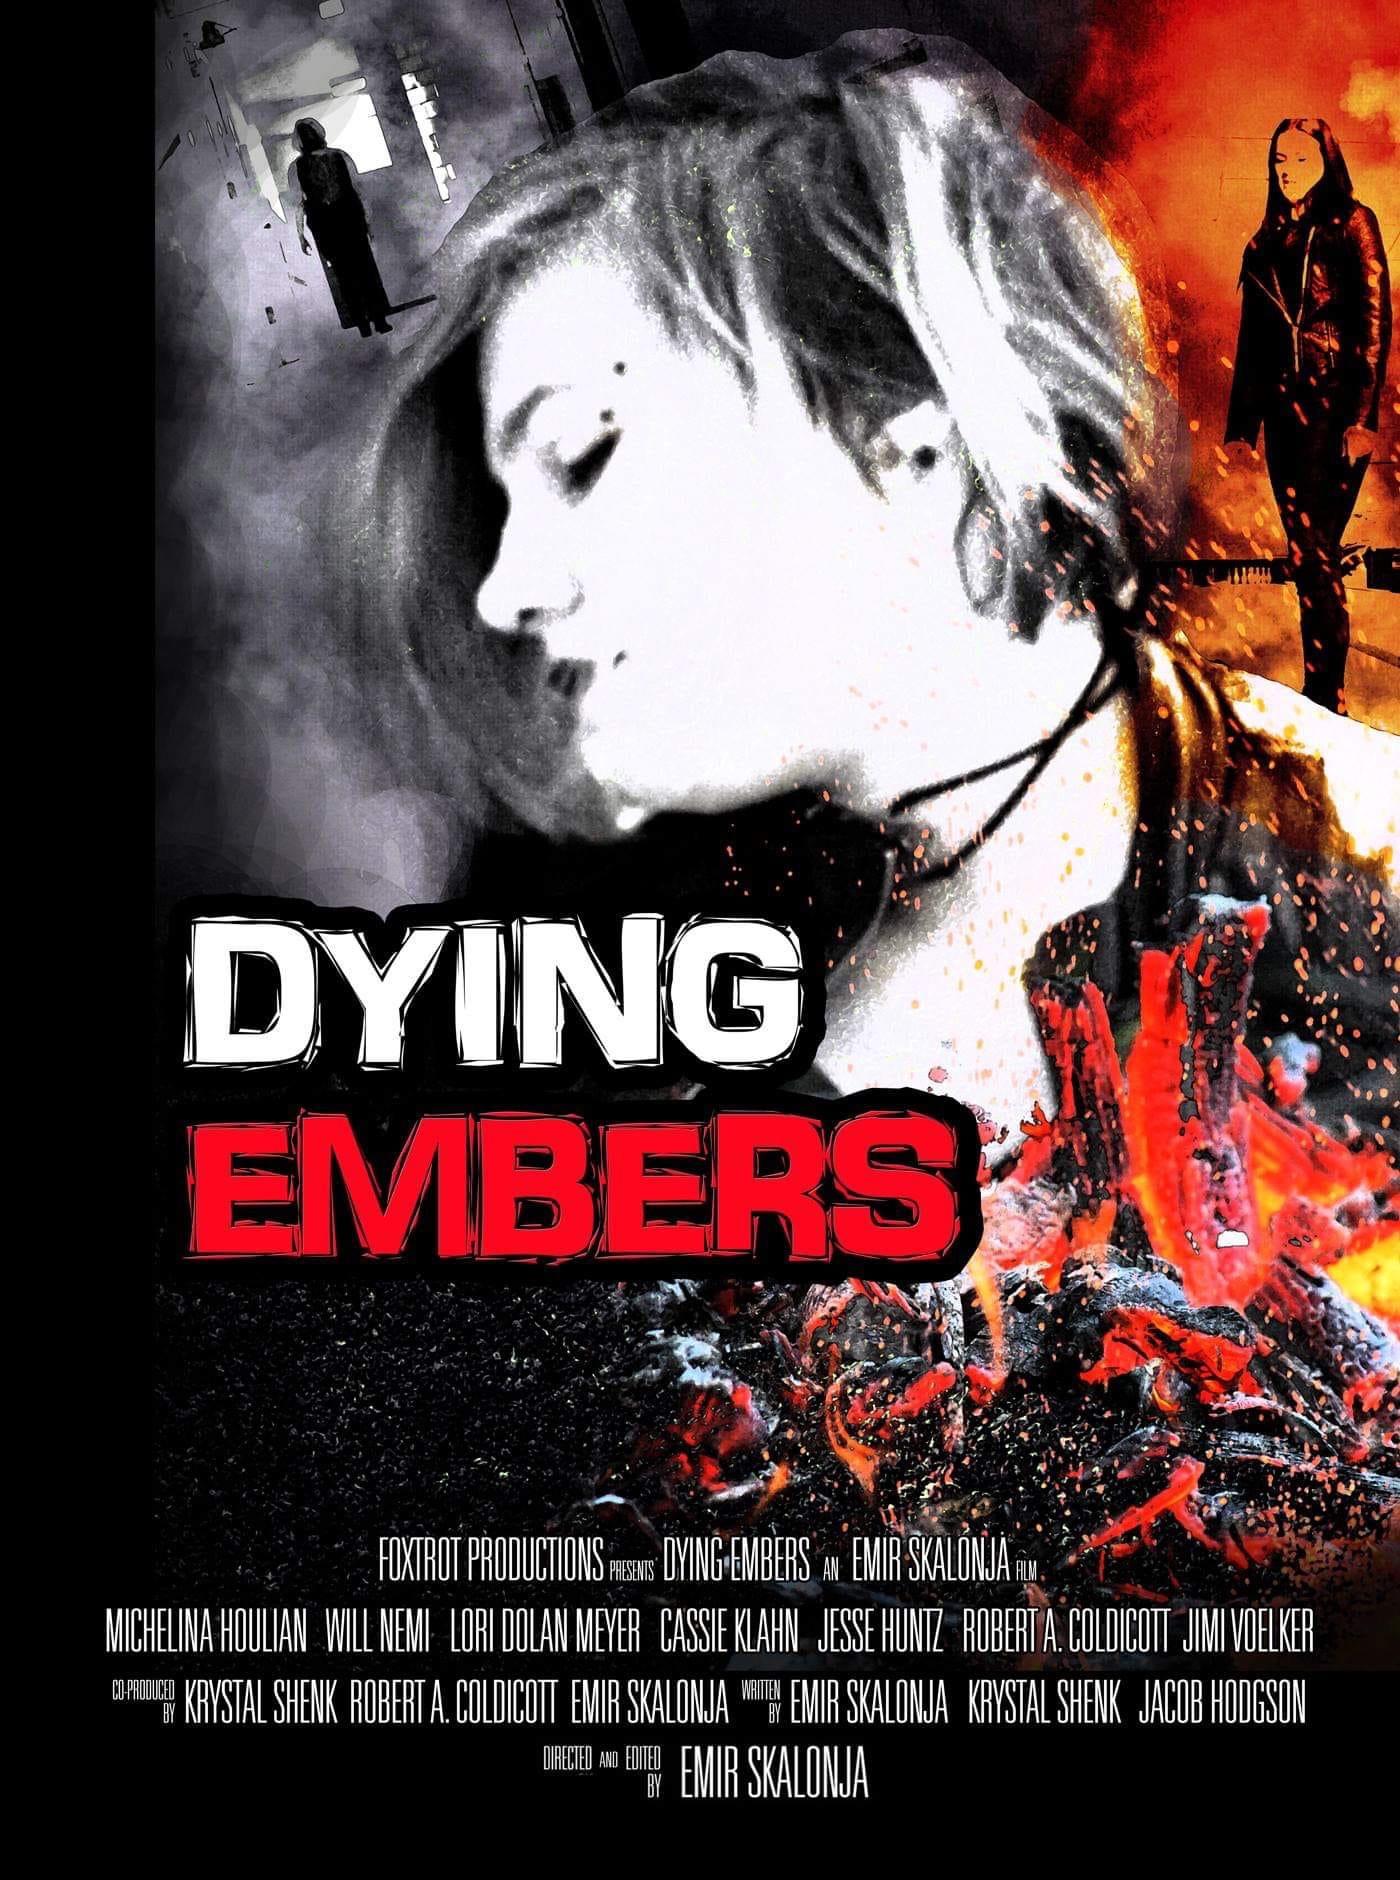 Nonton film Dying Embers layarkaca21 indoxx1 ganool online streaming terbaru